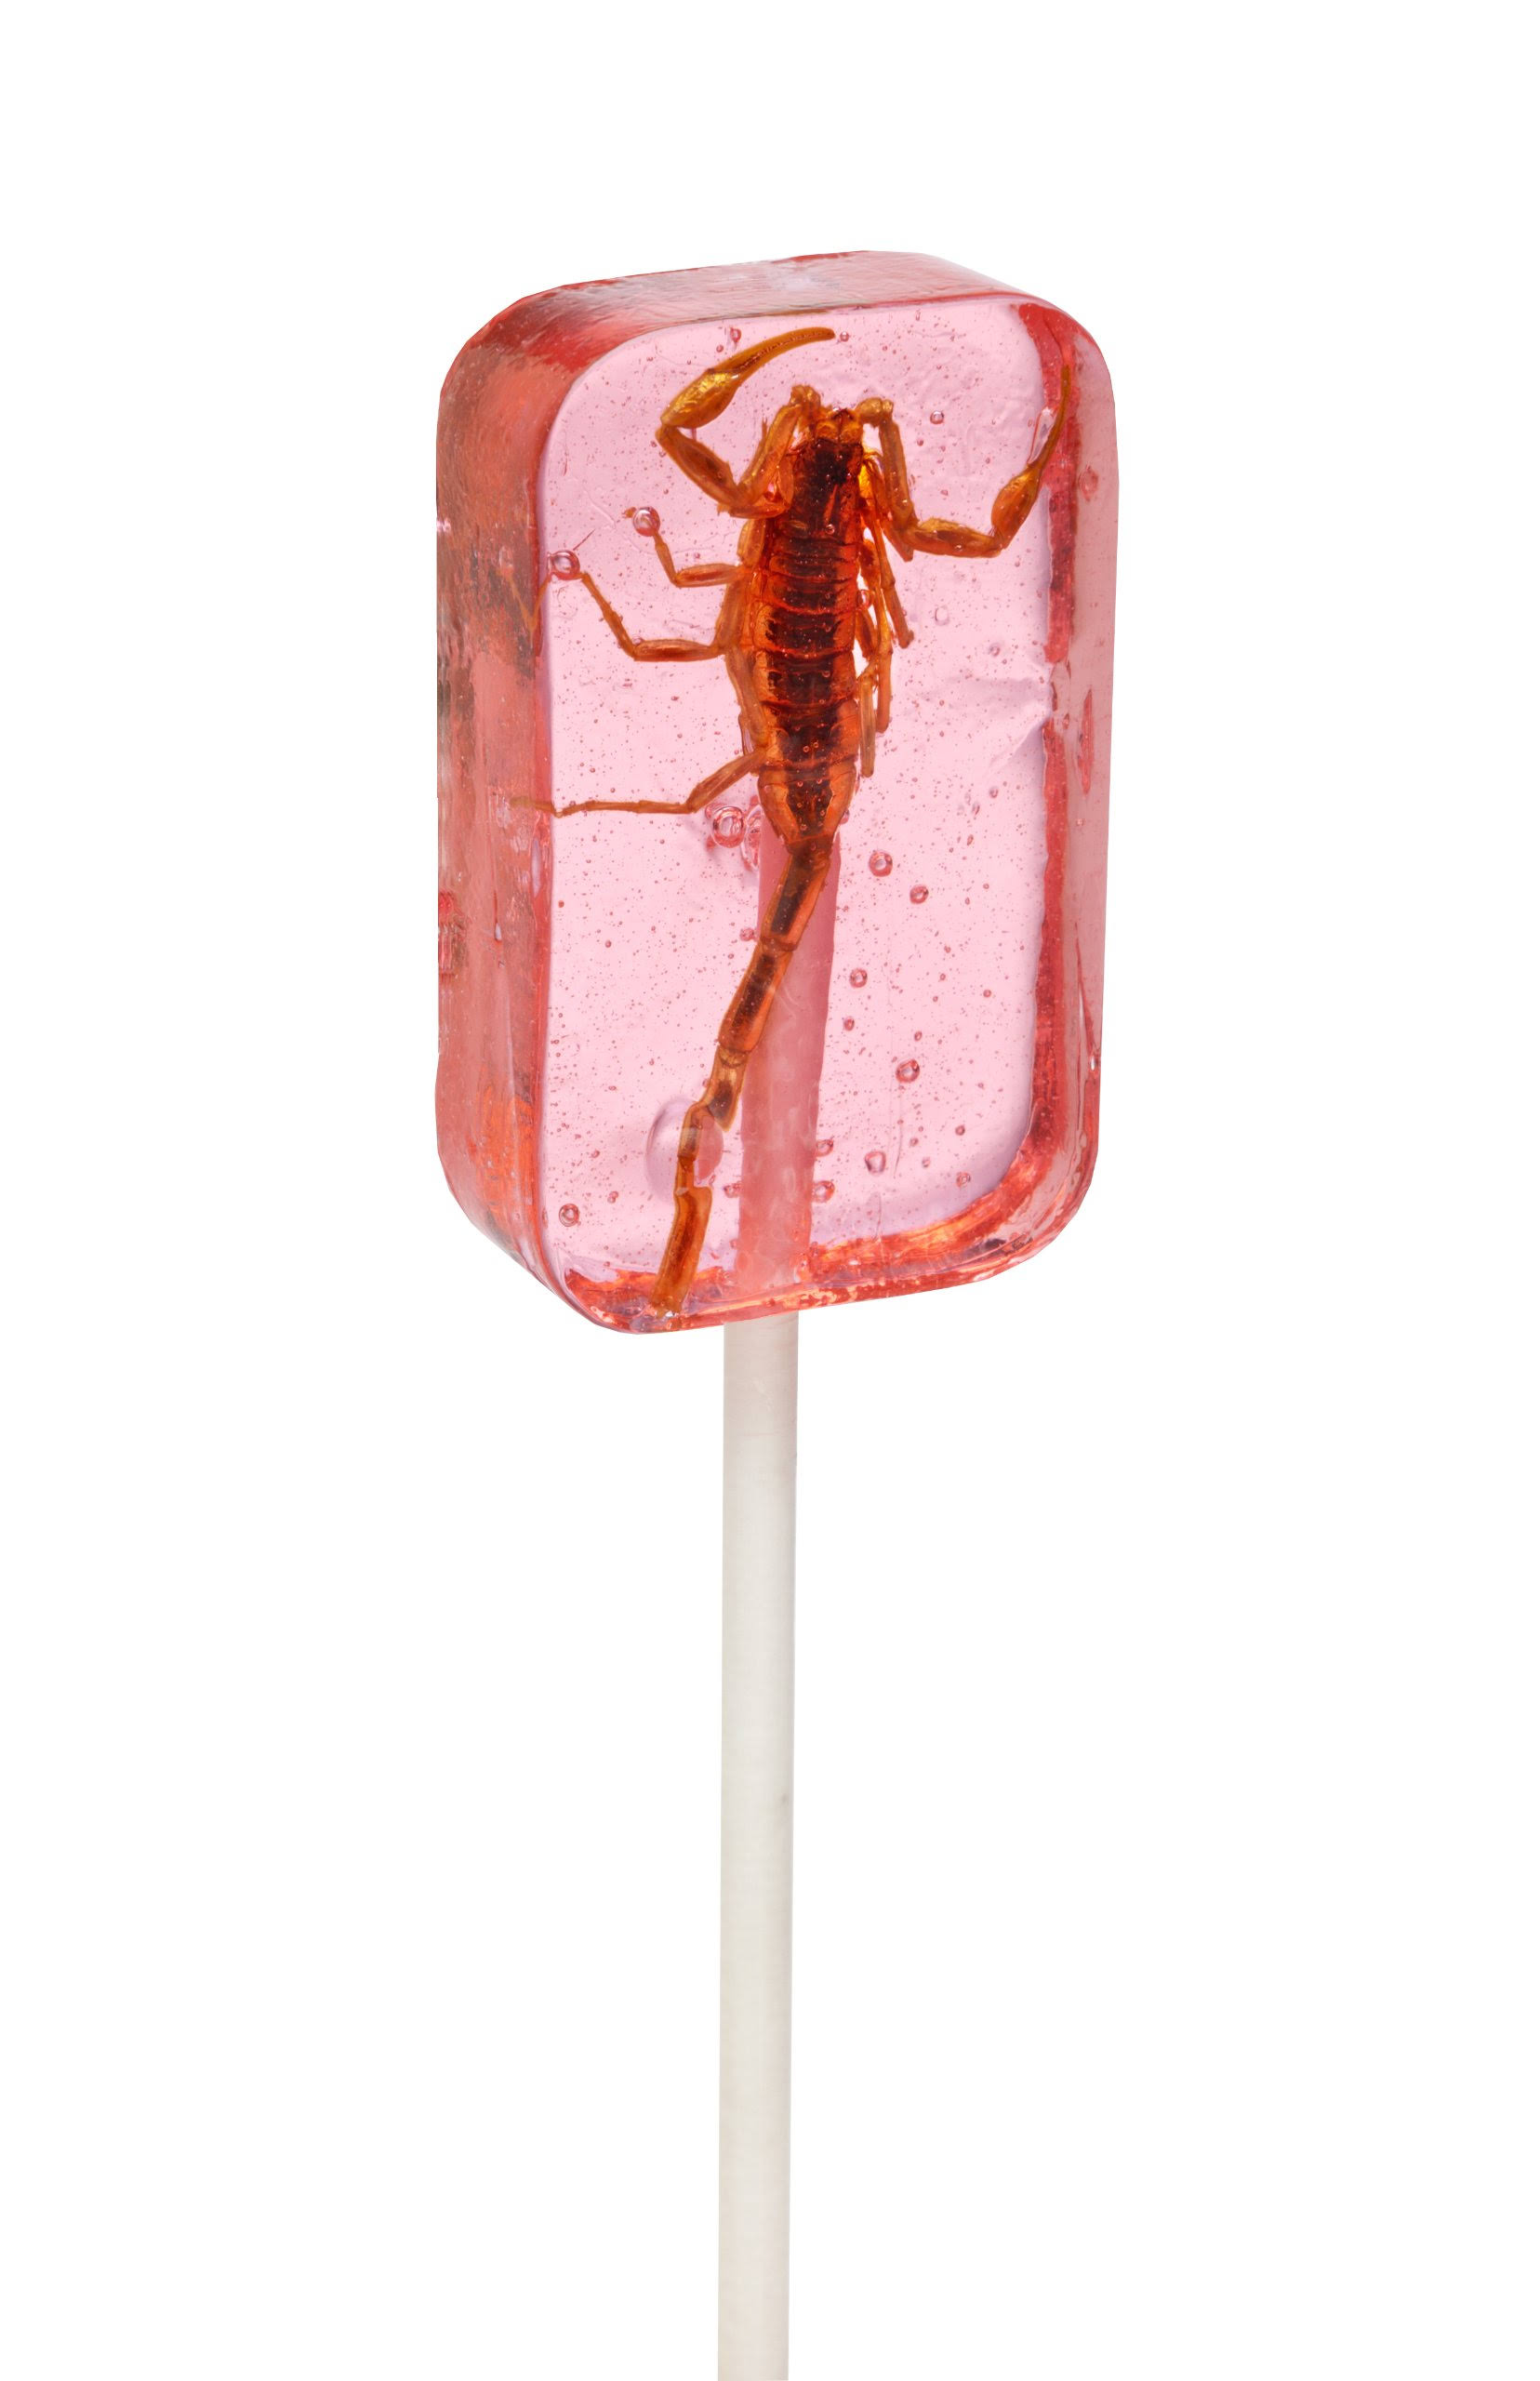 Strawberry Scorpion Sucker - Strawberry Flavored Sucker With Real Scor